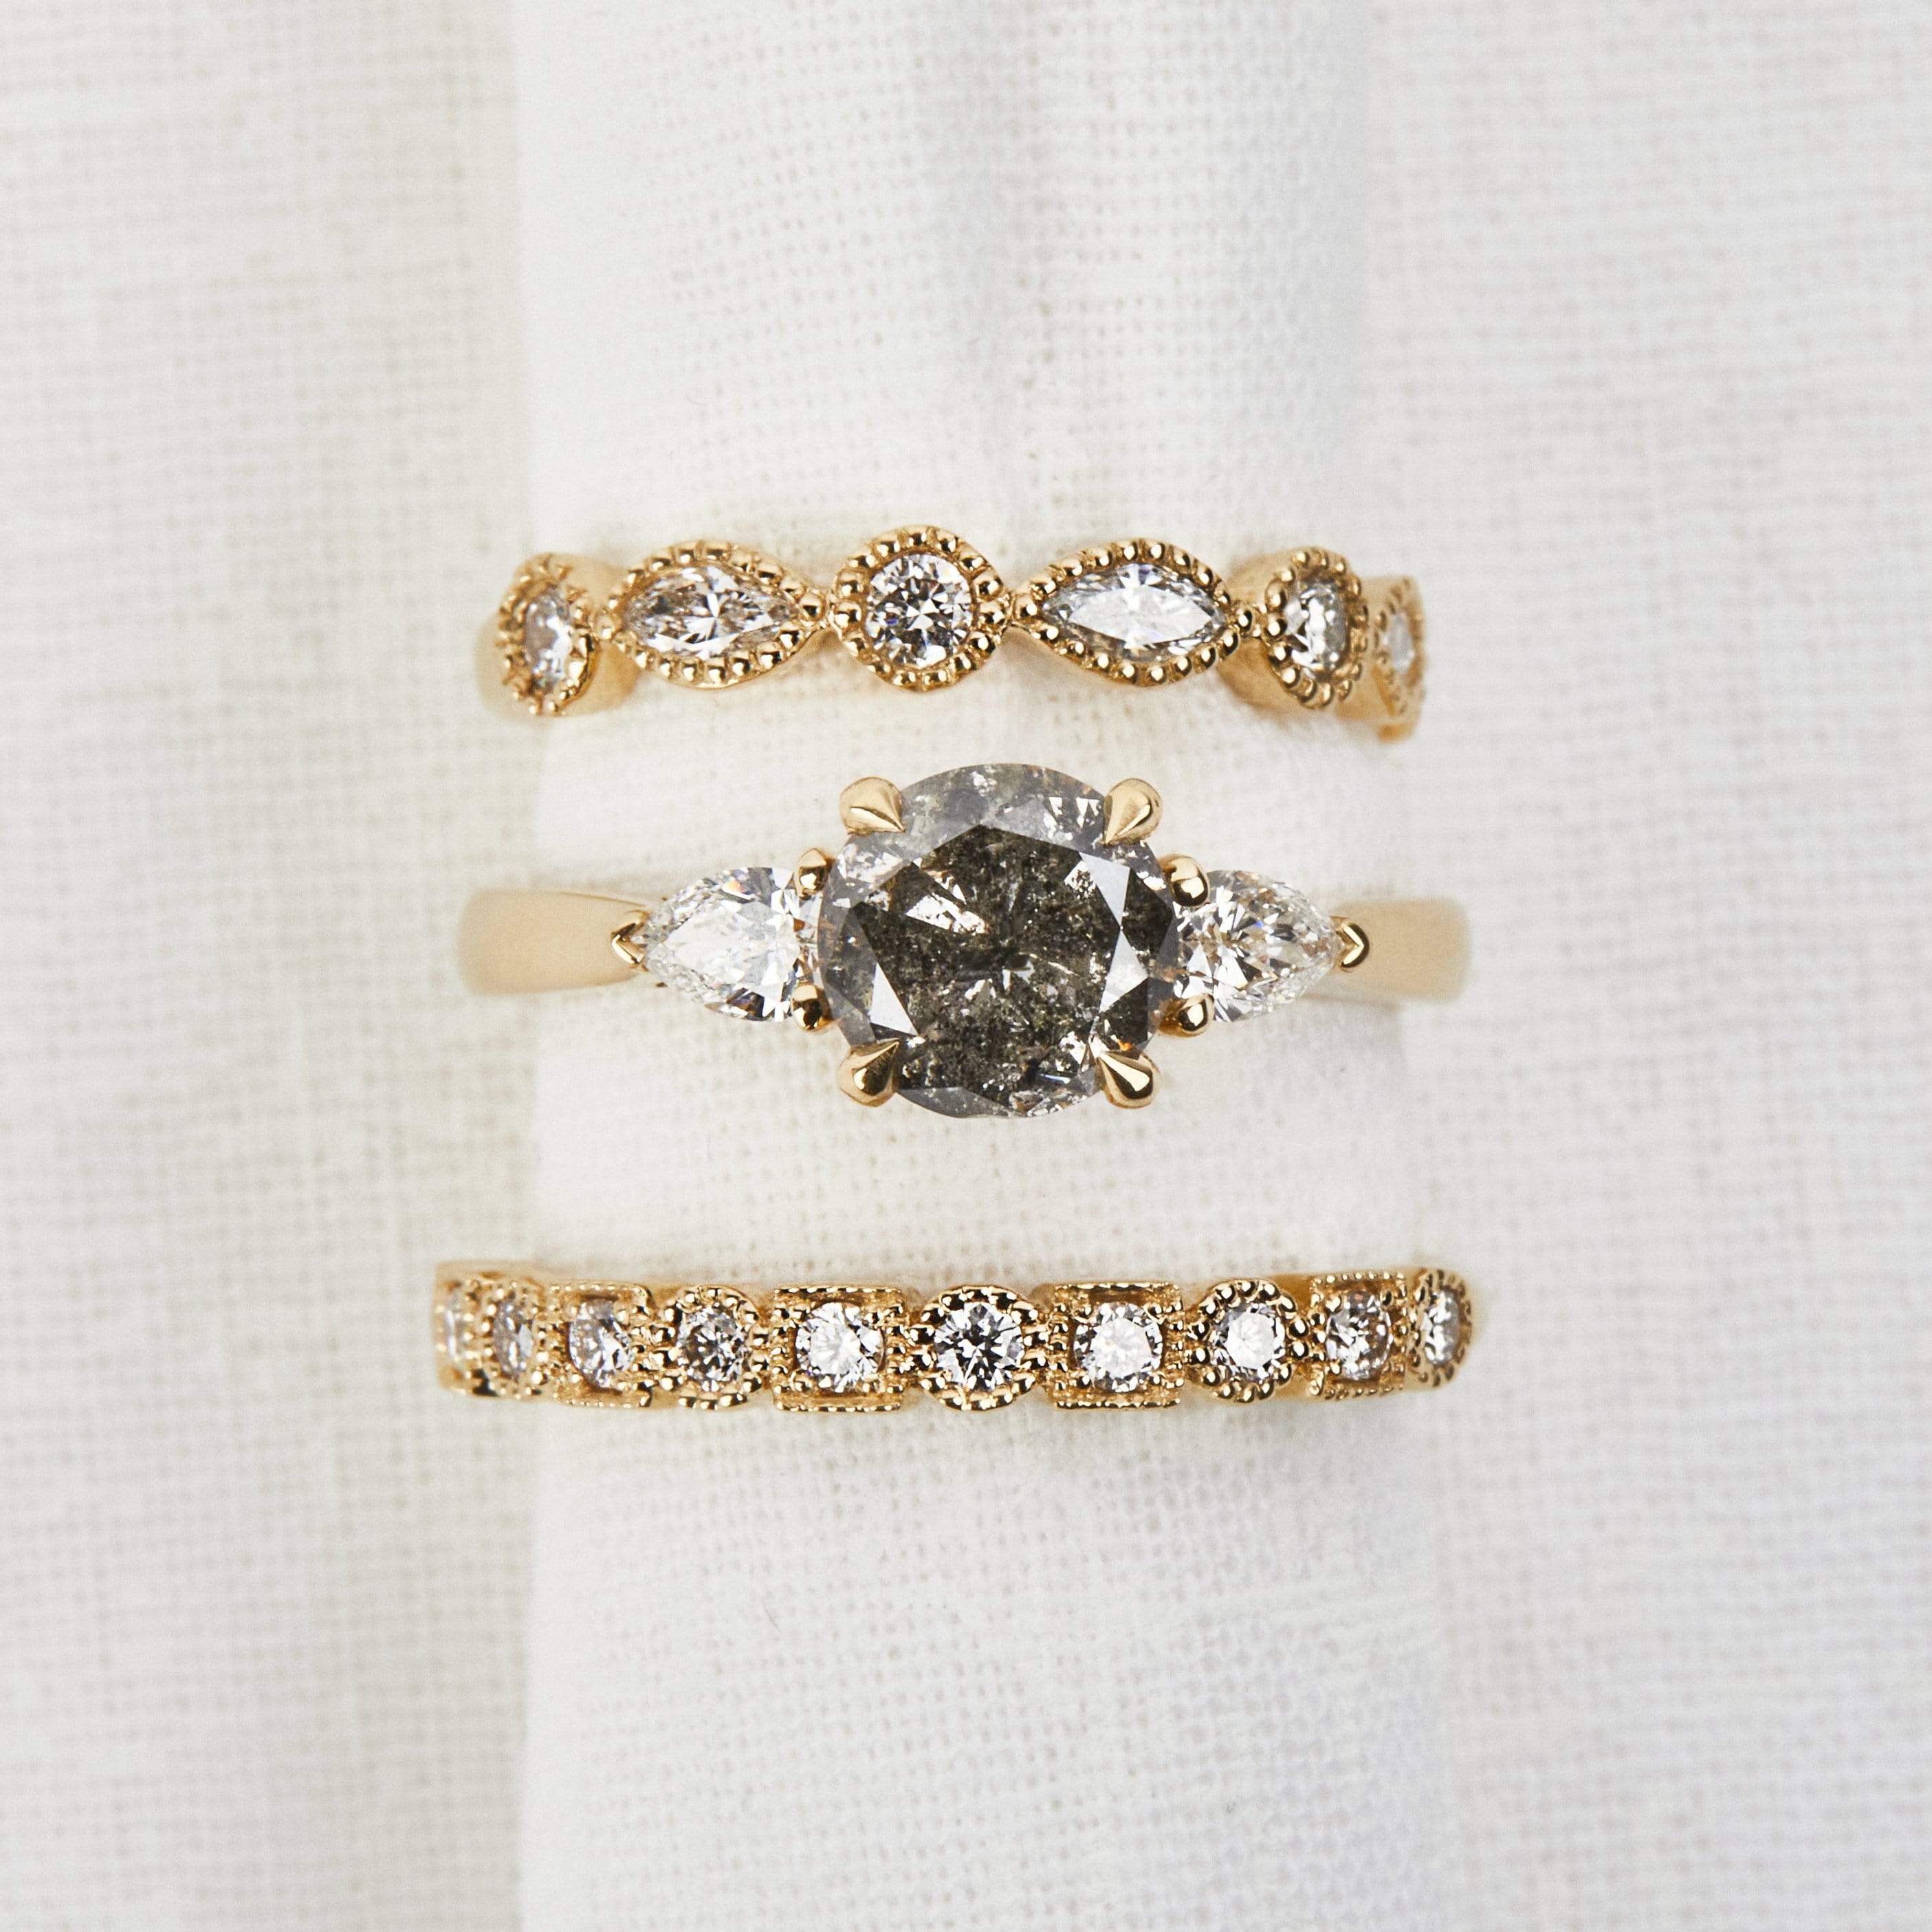 Sophia Perez Jewellery Rings Round Cut Galaxy Diamond Trilogy Ring